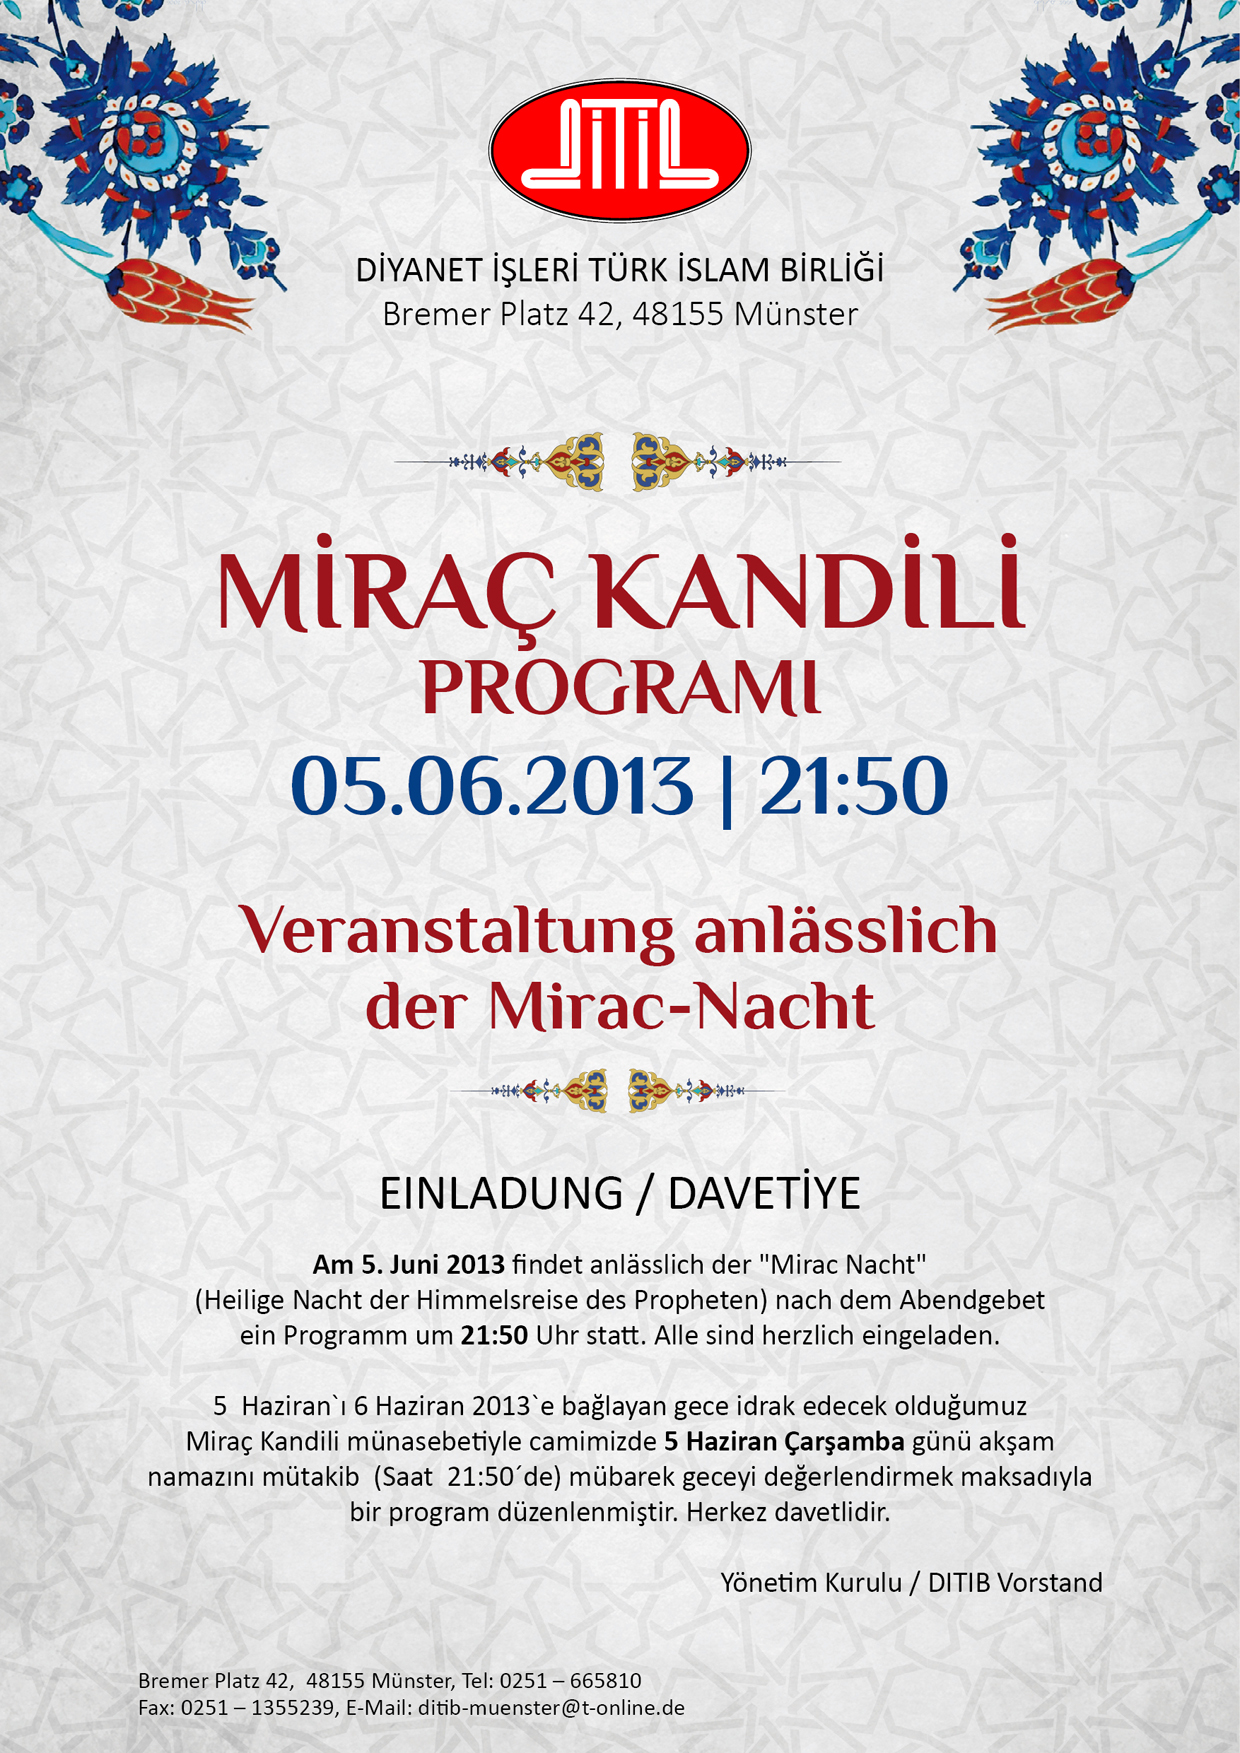 DITIB Münster Mirac Kandili Programi 2013